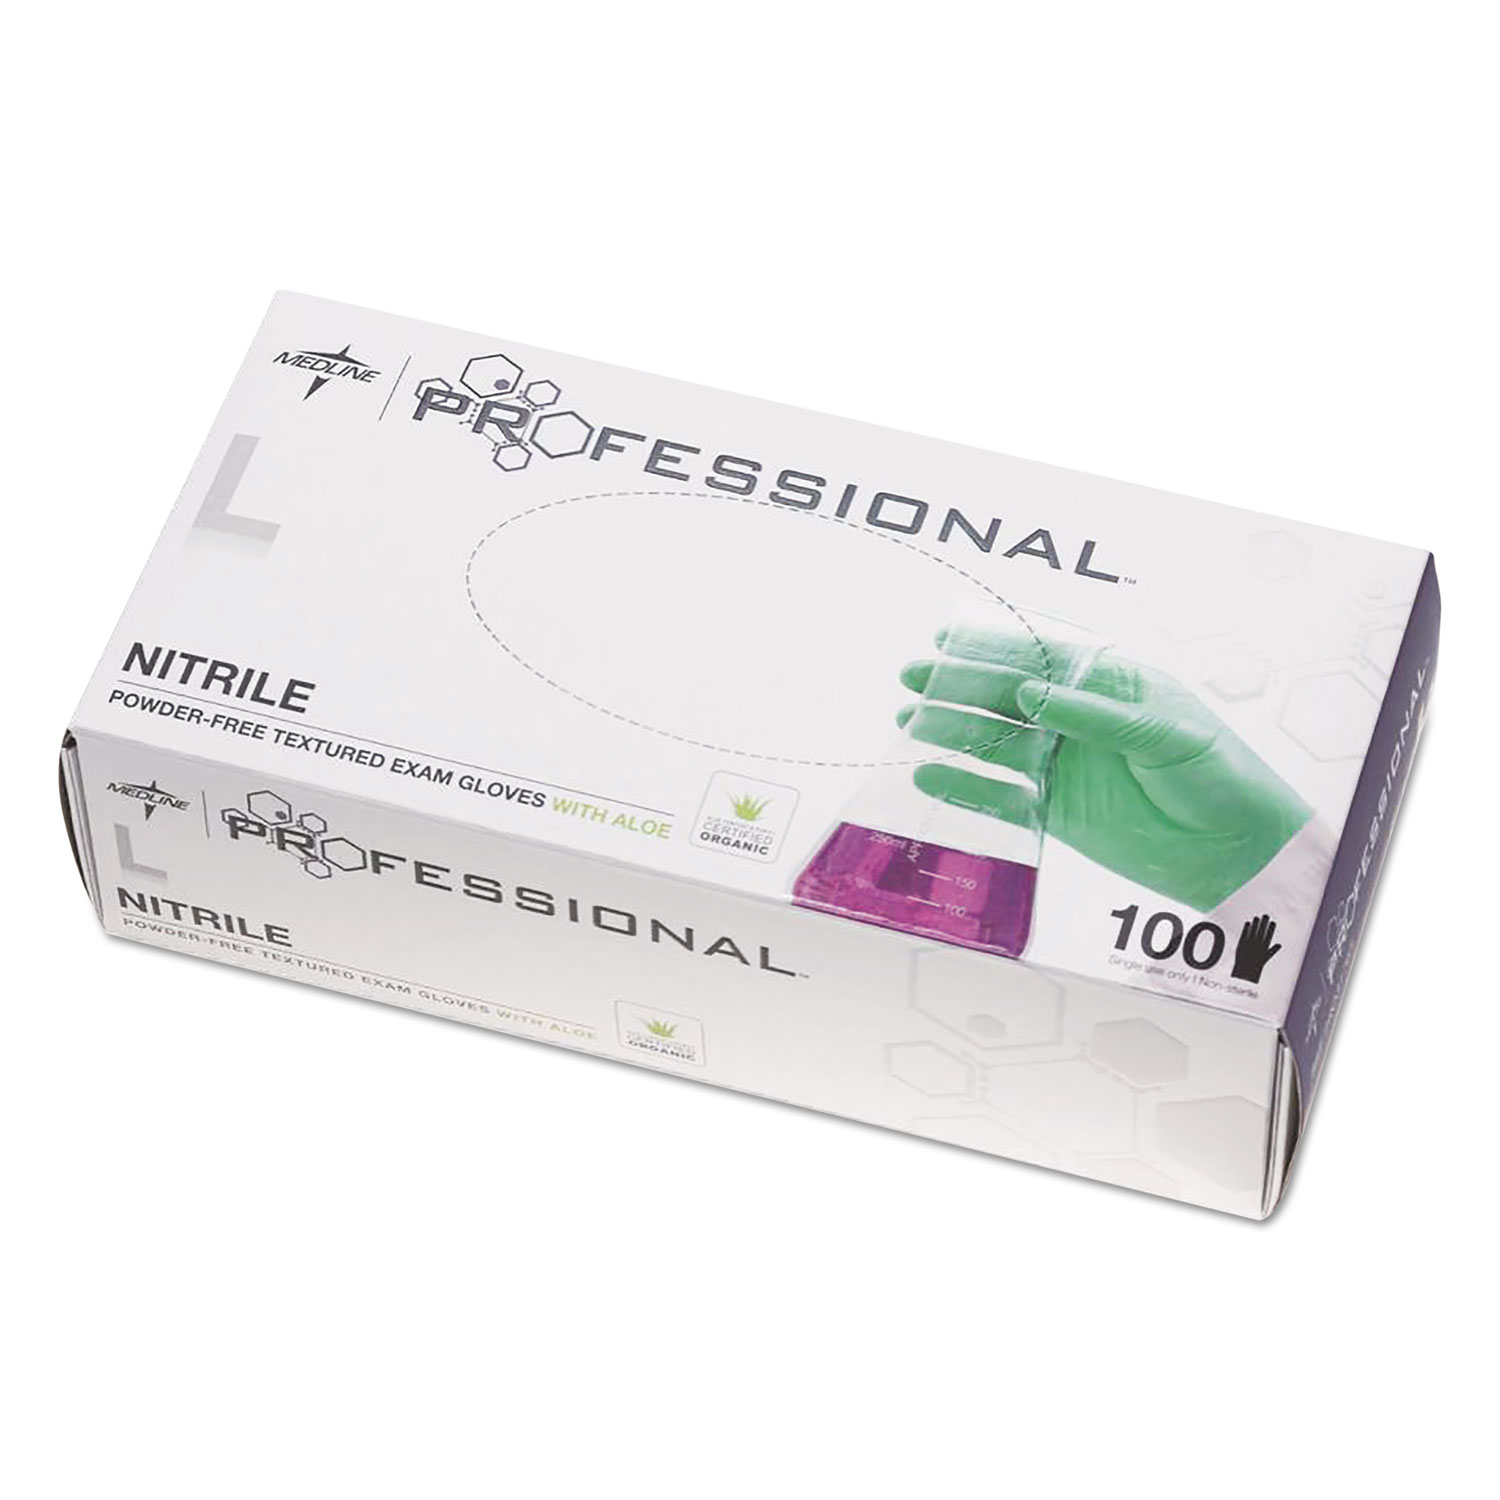  Medline PRO31763 Professional Nitrile Exam Gloves with Aloe, Large, Green, 100/Box (MIIPRO31763) 